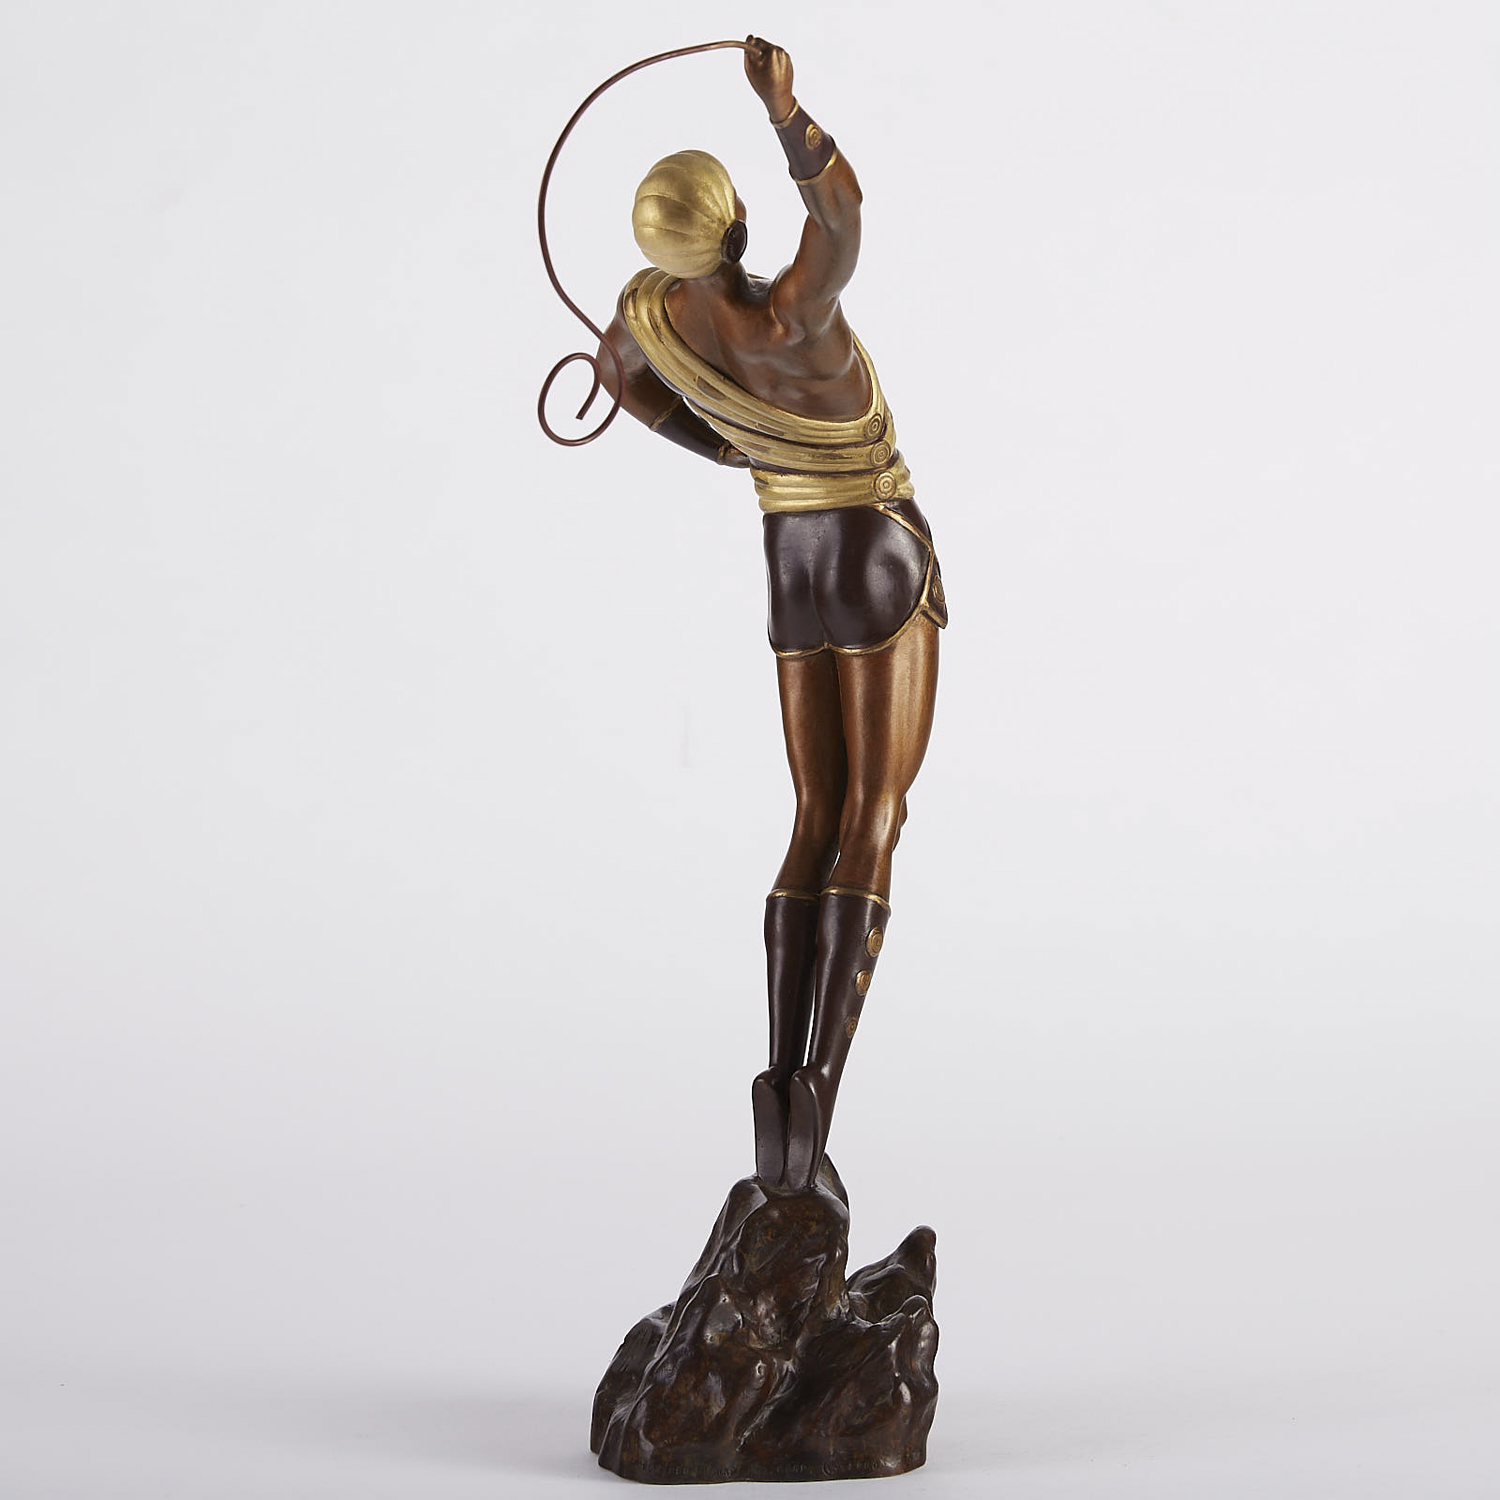 Erte Bronze "Le Danseur" - Image 4 of 6